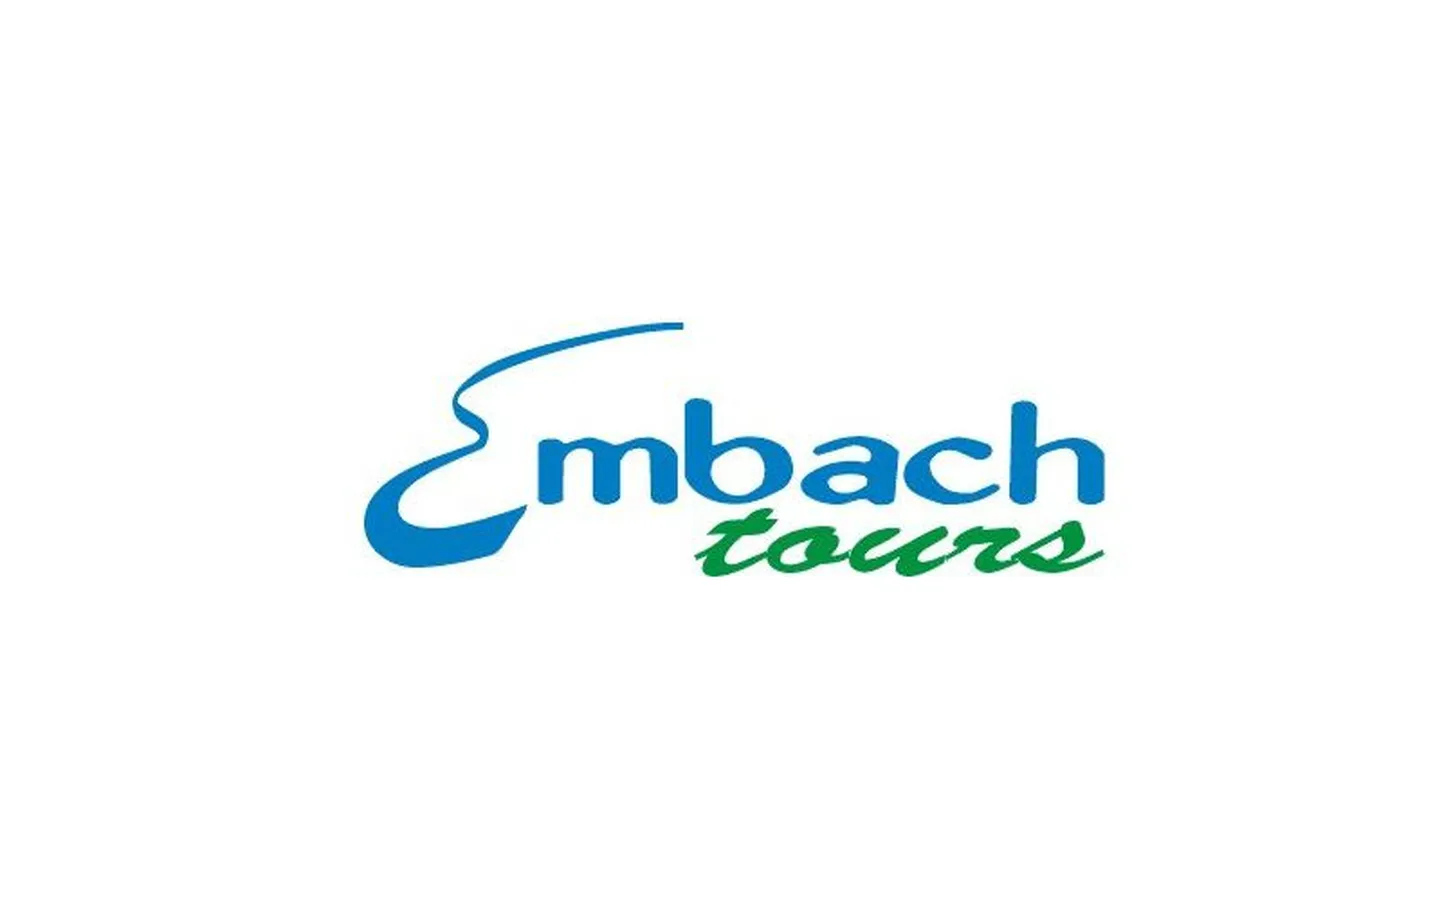 Embach Toursi logo.